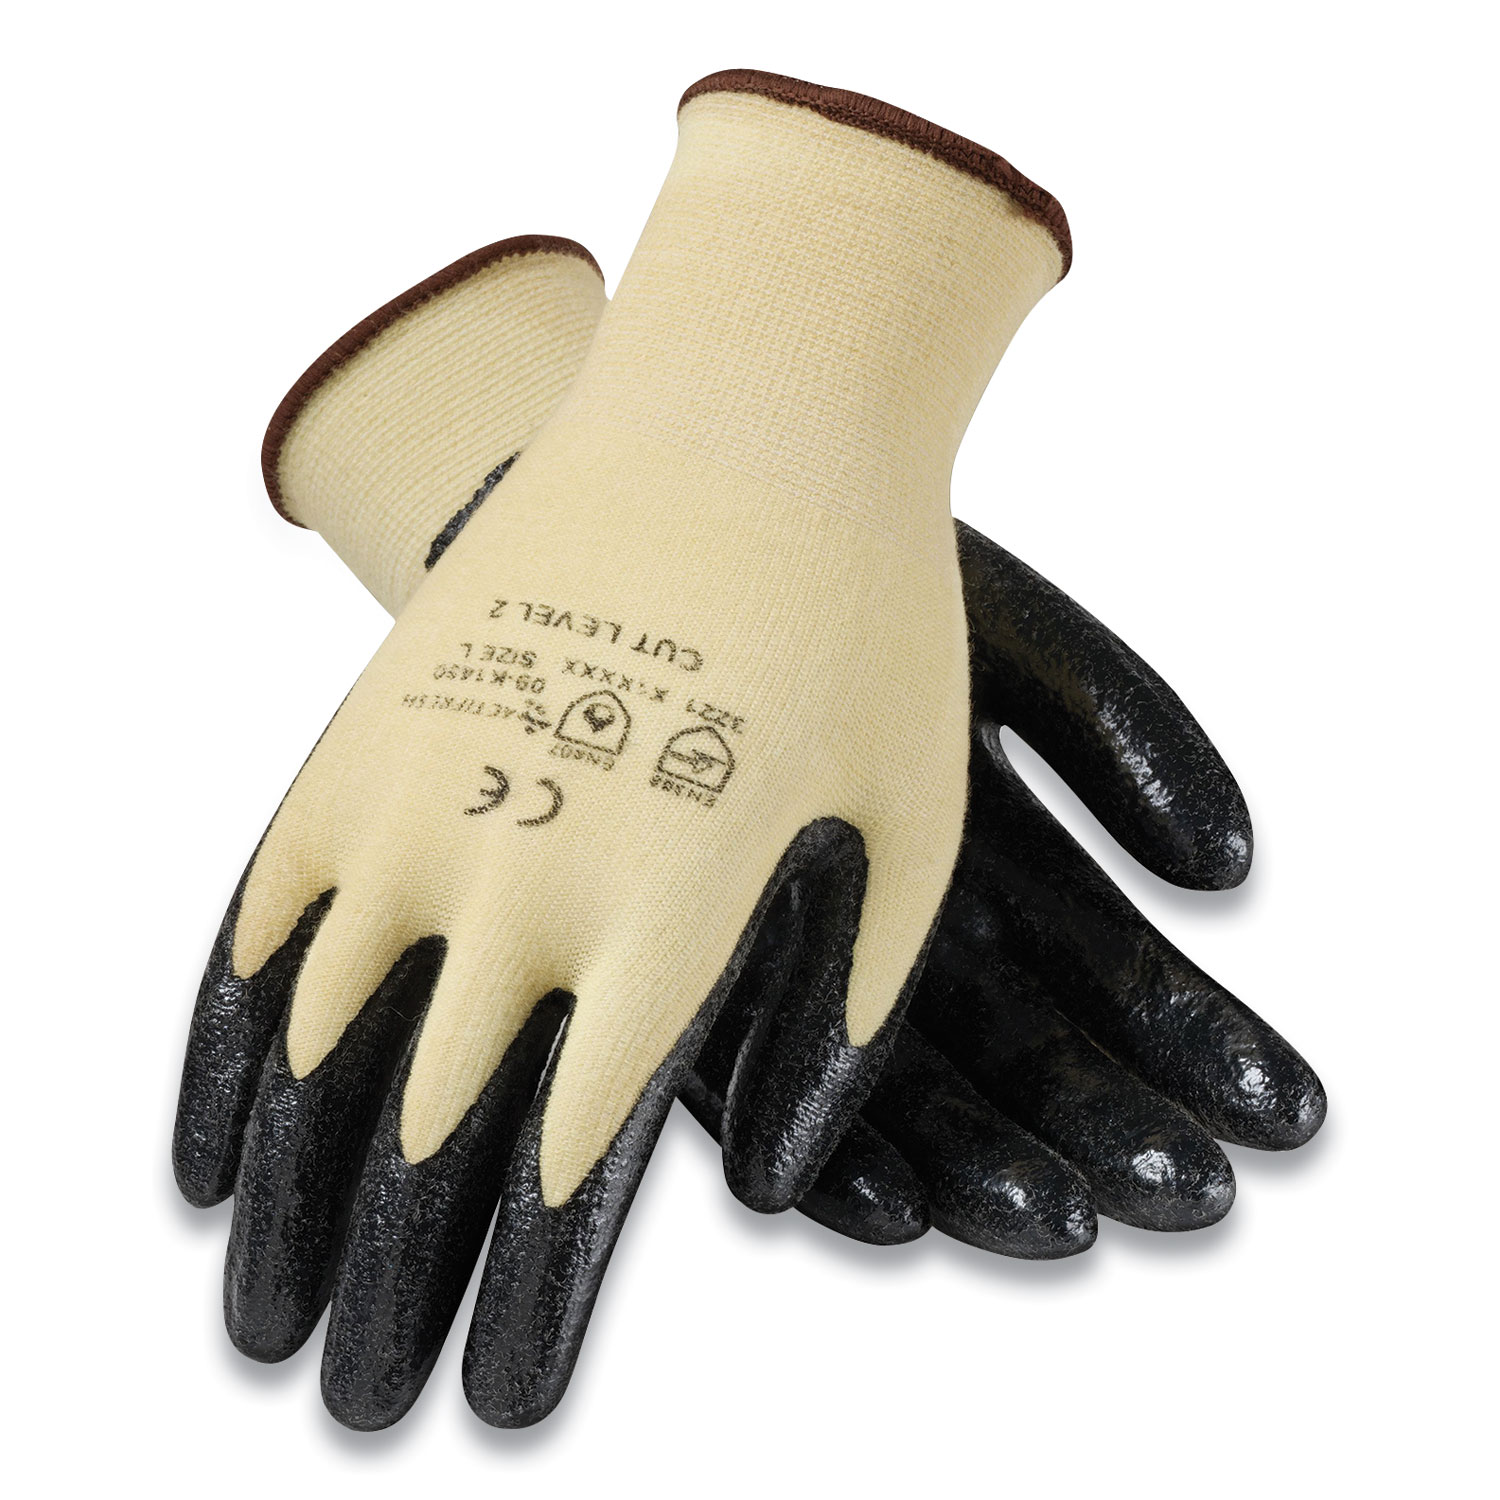 G-Tek 09-K1450/L Kev Seamless Knit Kevlar Gloves, Large, Yellow/Black